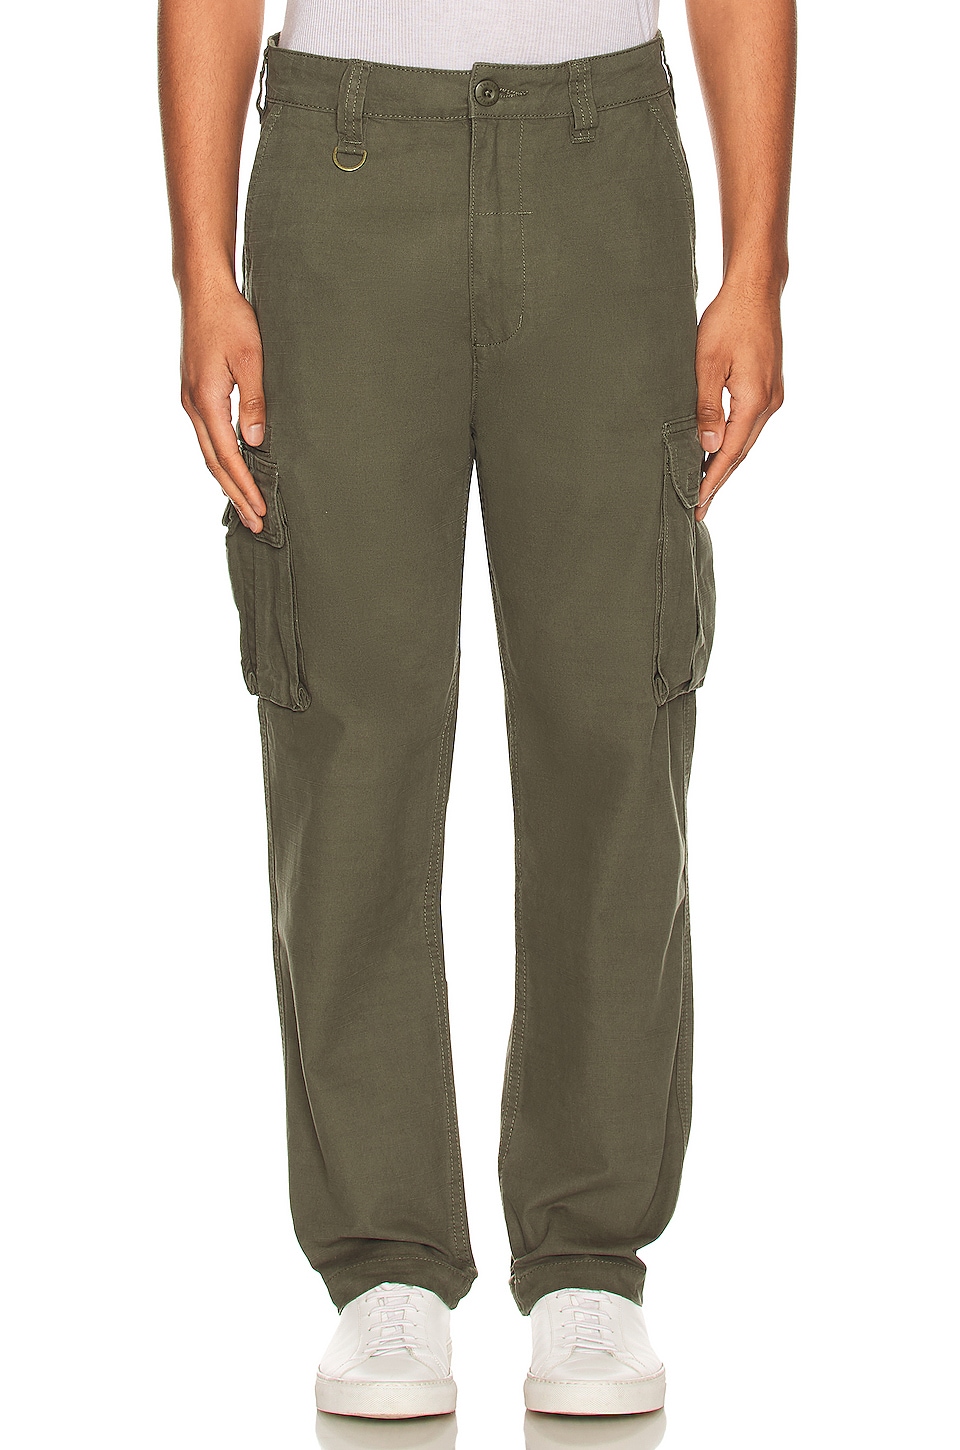 THRILLS Slacker Cargo Pants in Army Green | REVOLVE